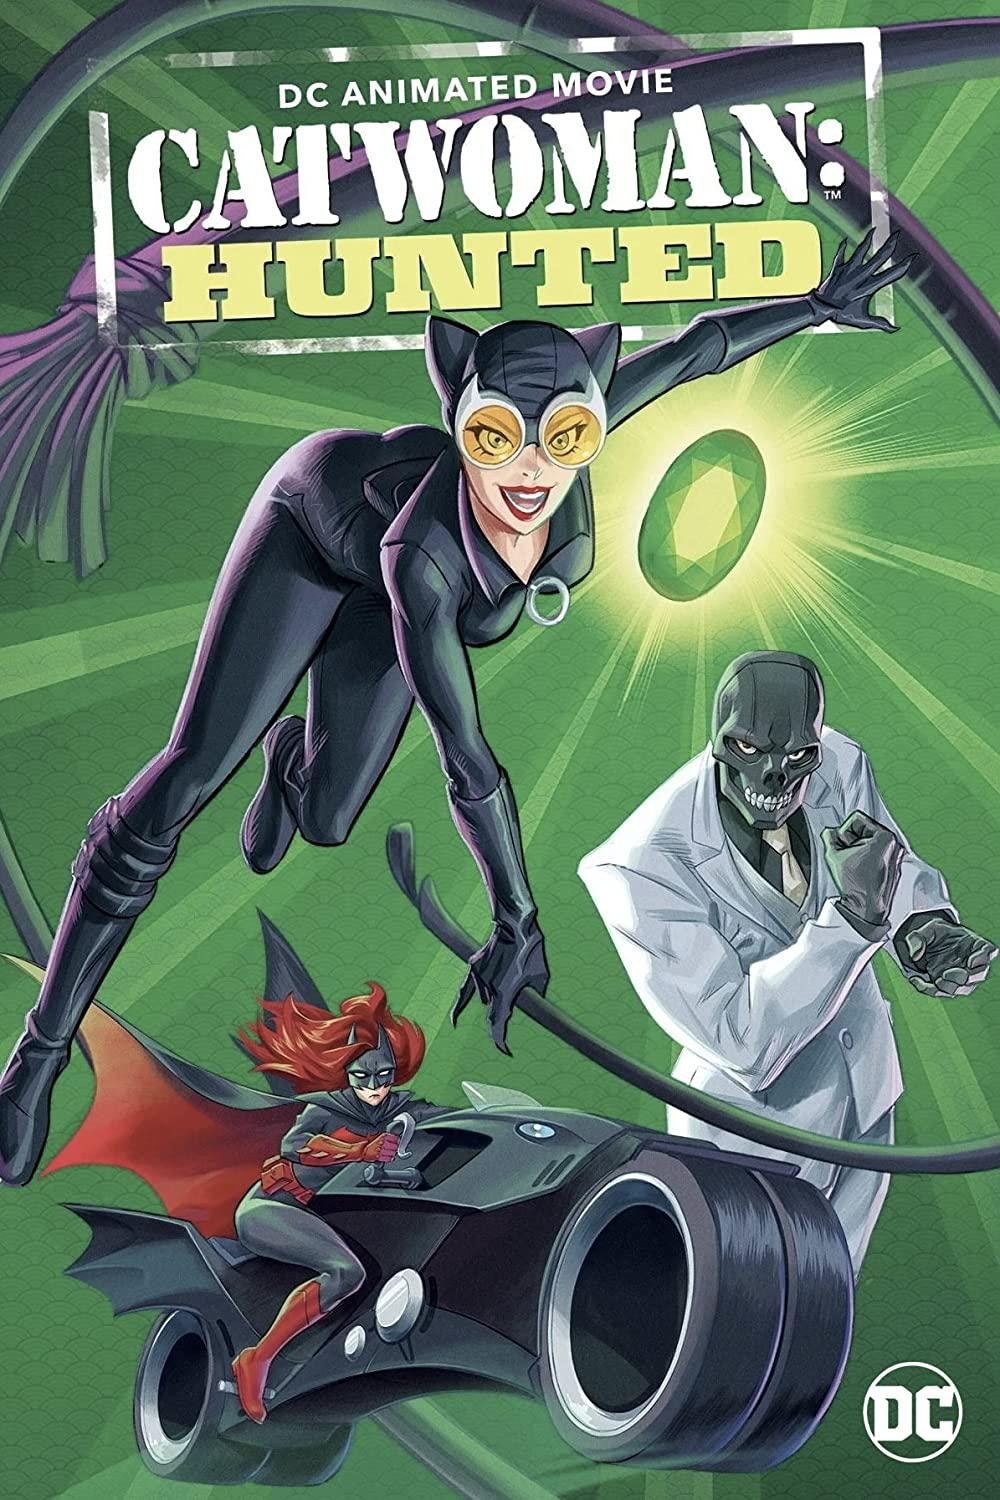 [猫女：猎捕 Catwoman: Hunted][2022][美国][动画][英语]